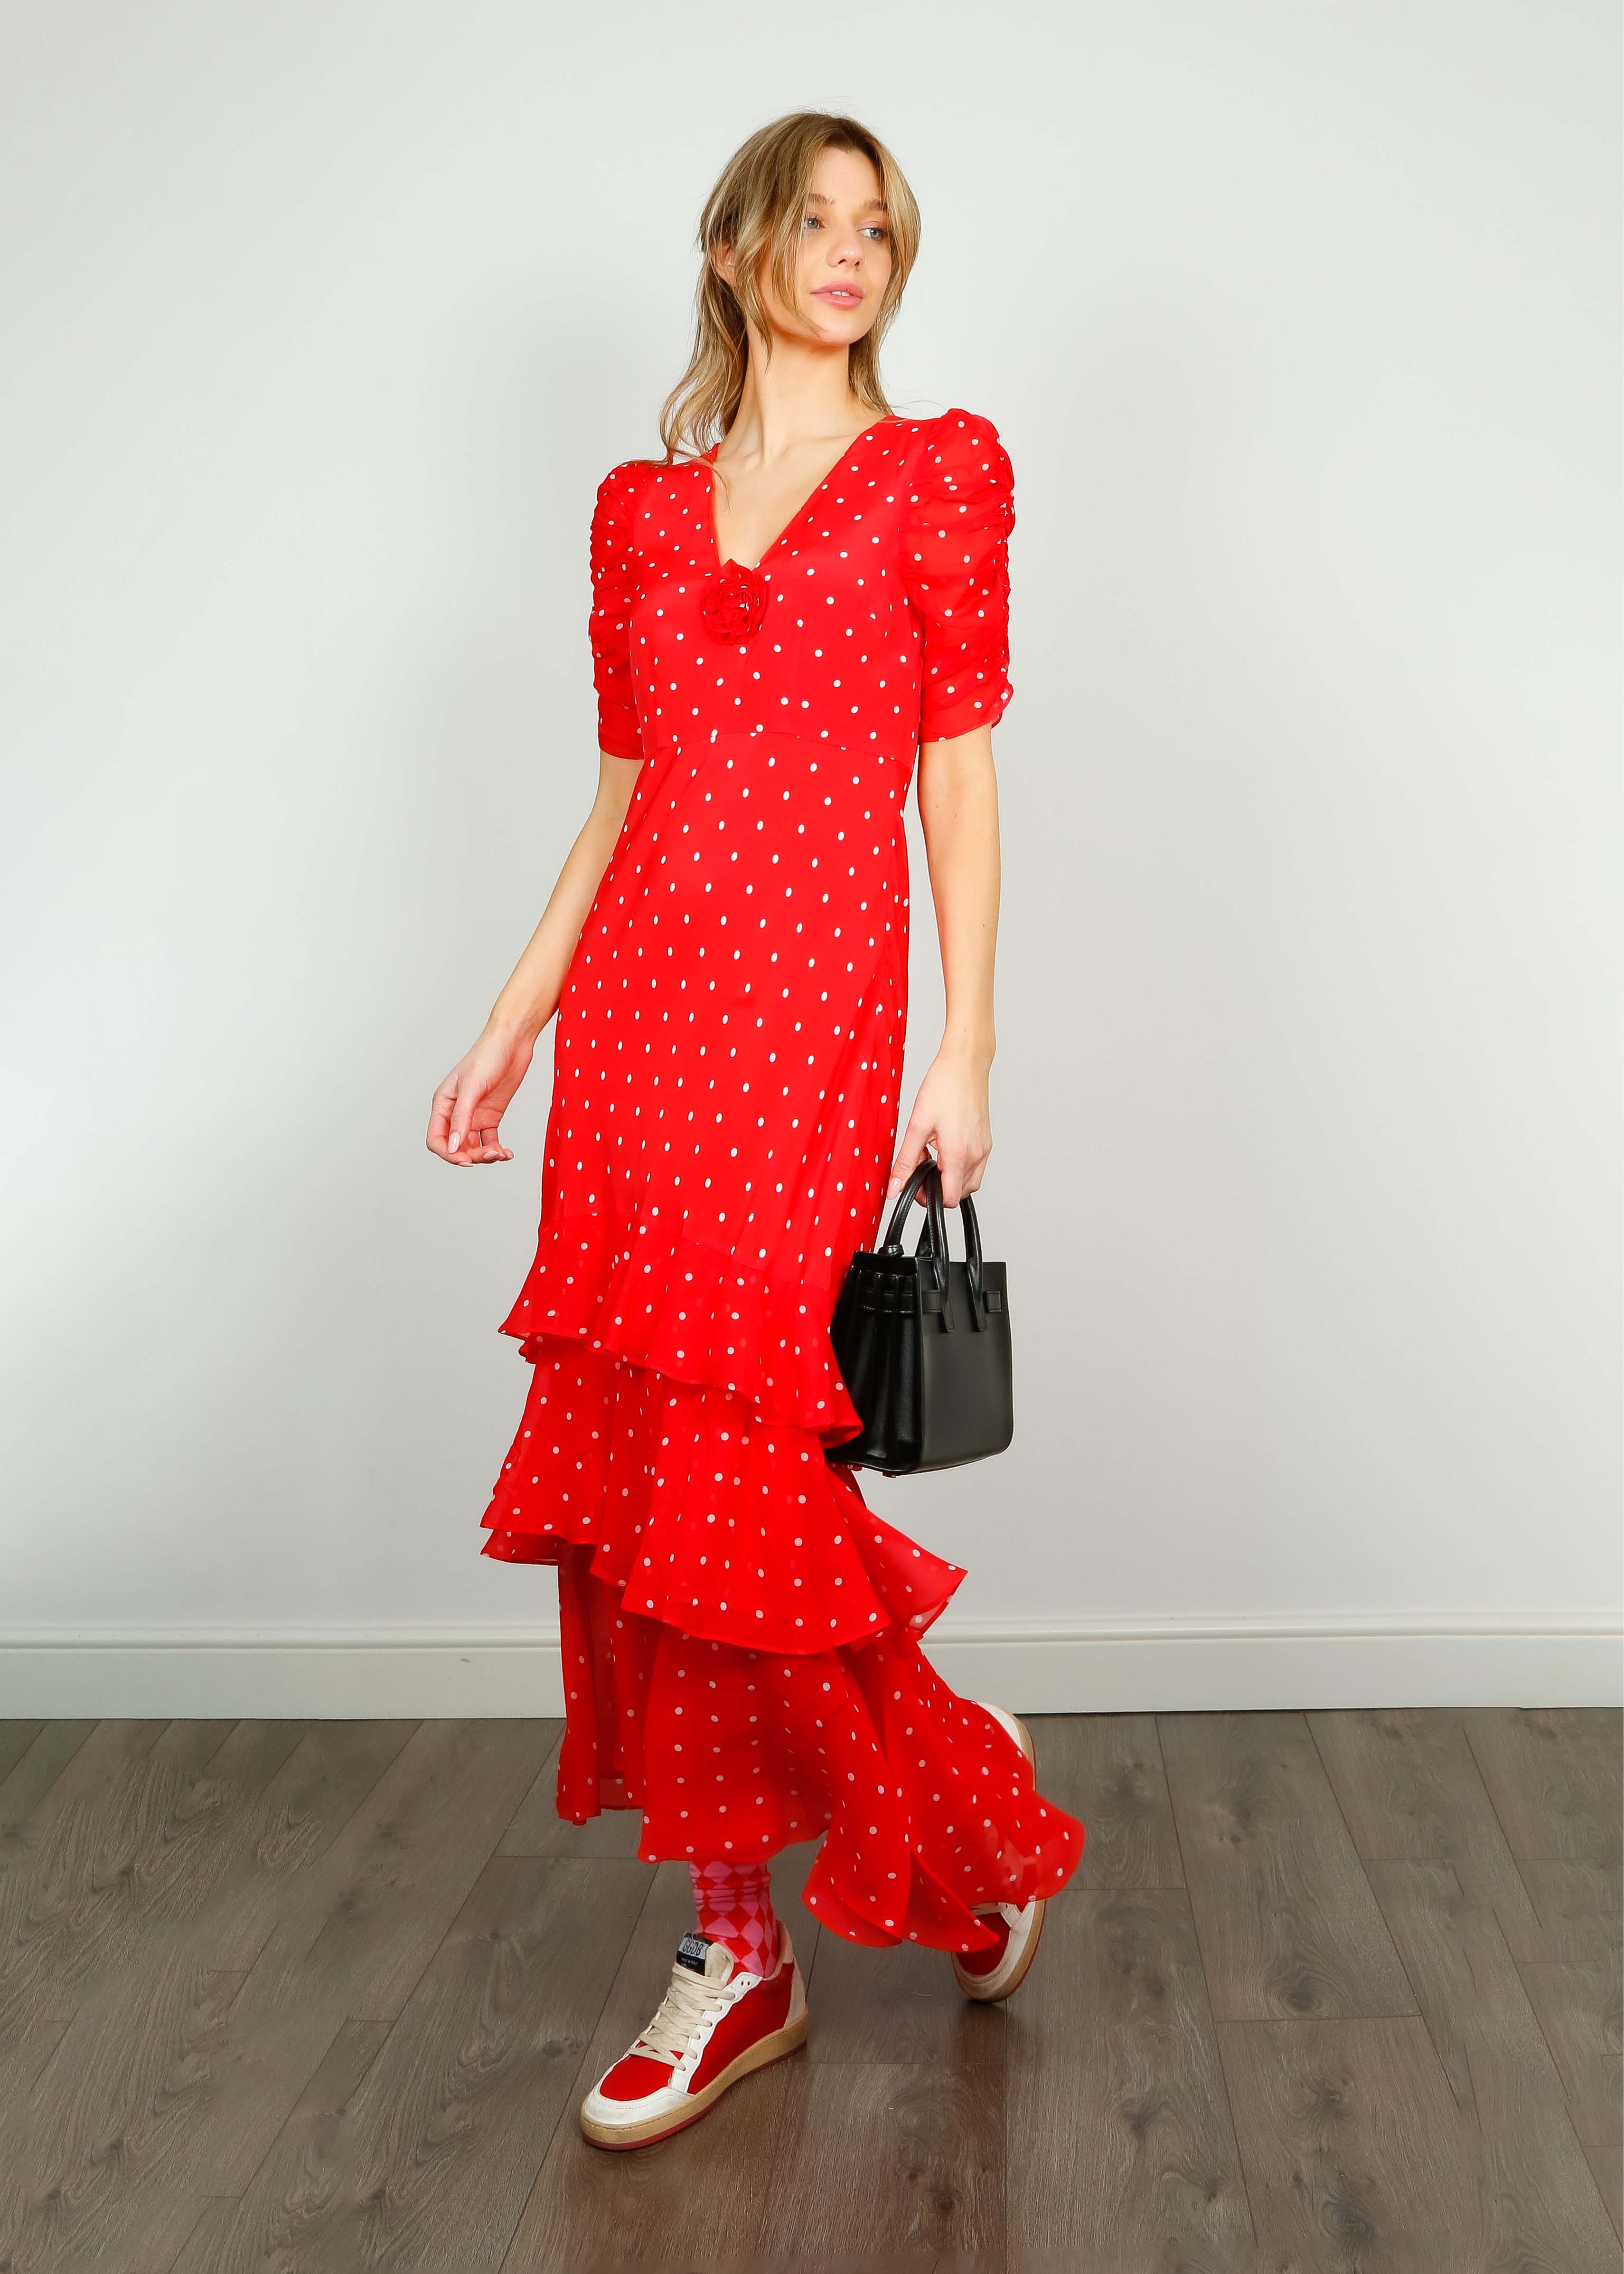 RIXO Rosheen Dress in Red Vintage Spot